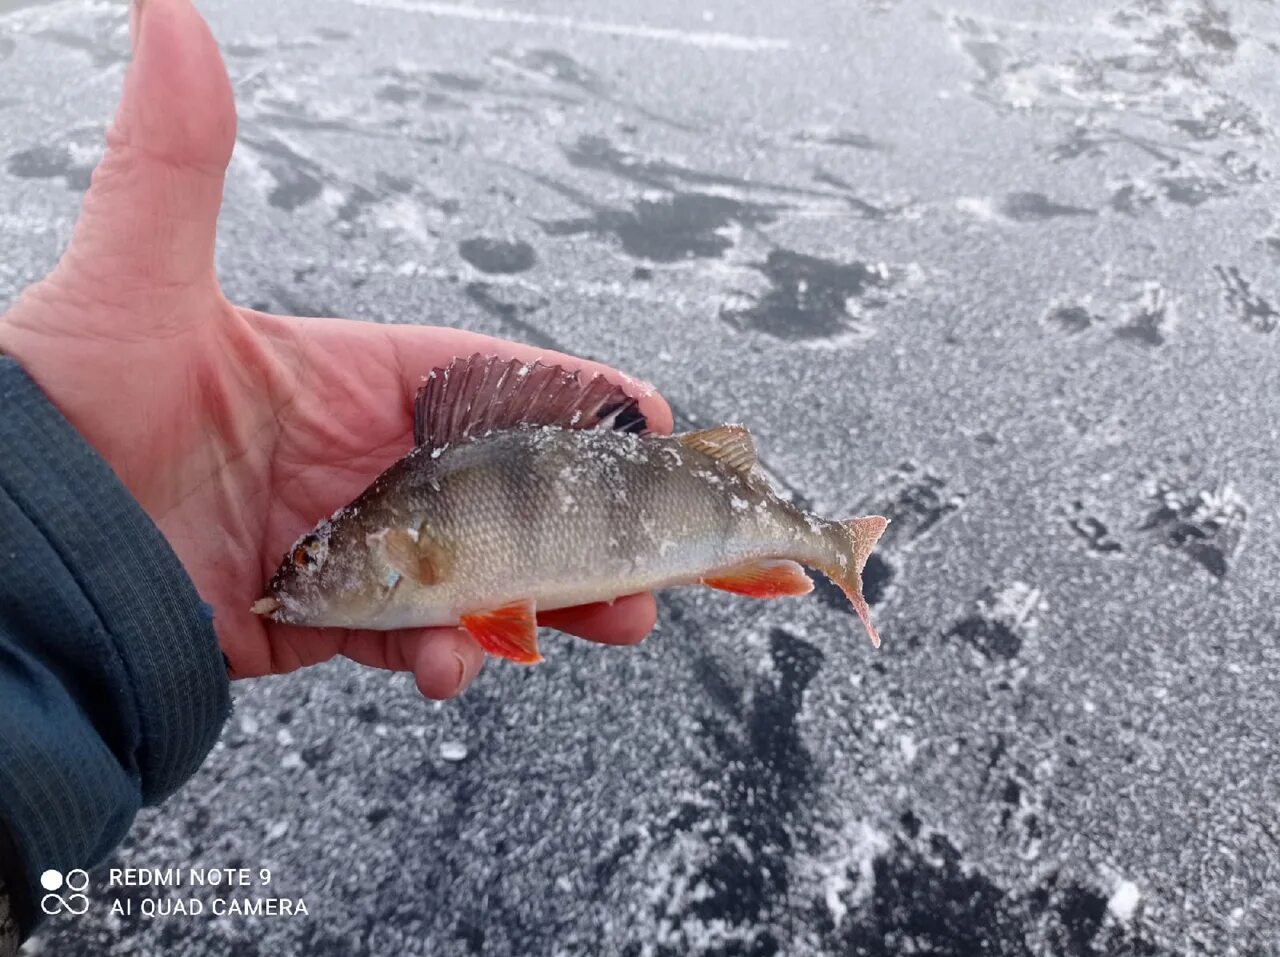 Соната тур рыбалка на севере. Соната тур рыбалка на севере Архангельск. Рыбалка на севере перволедок. Рыбалка на севере 2020. Форум на севере северодвинск